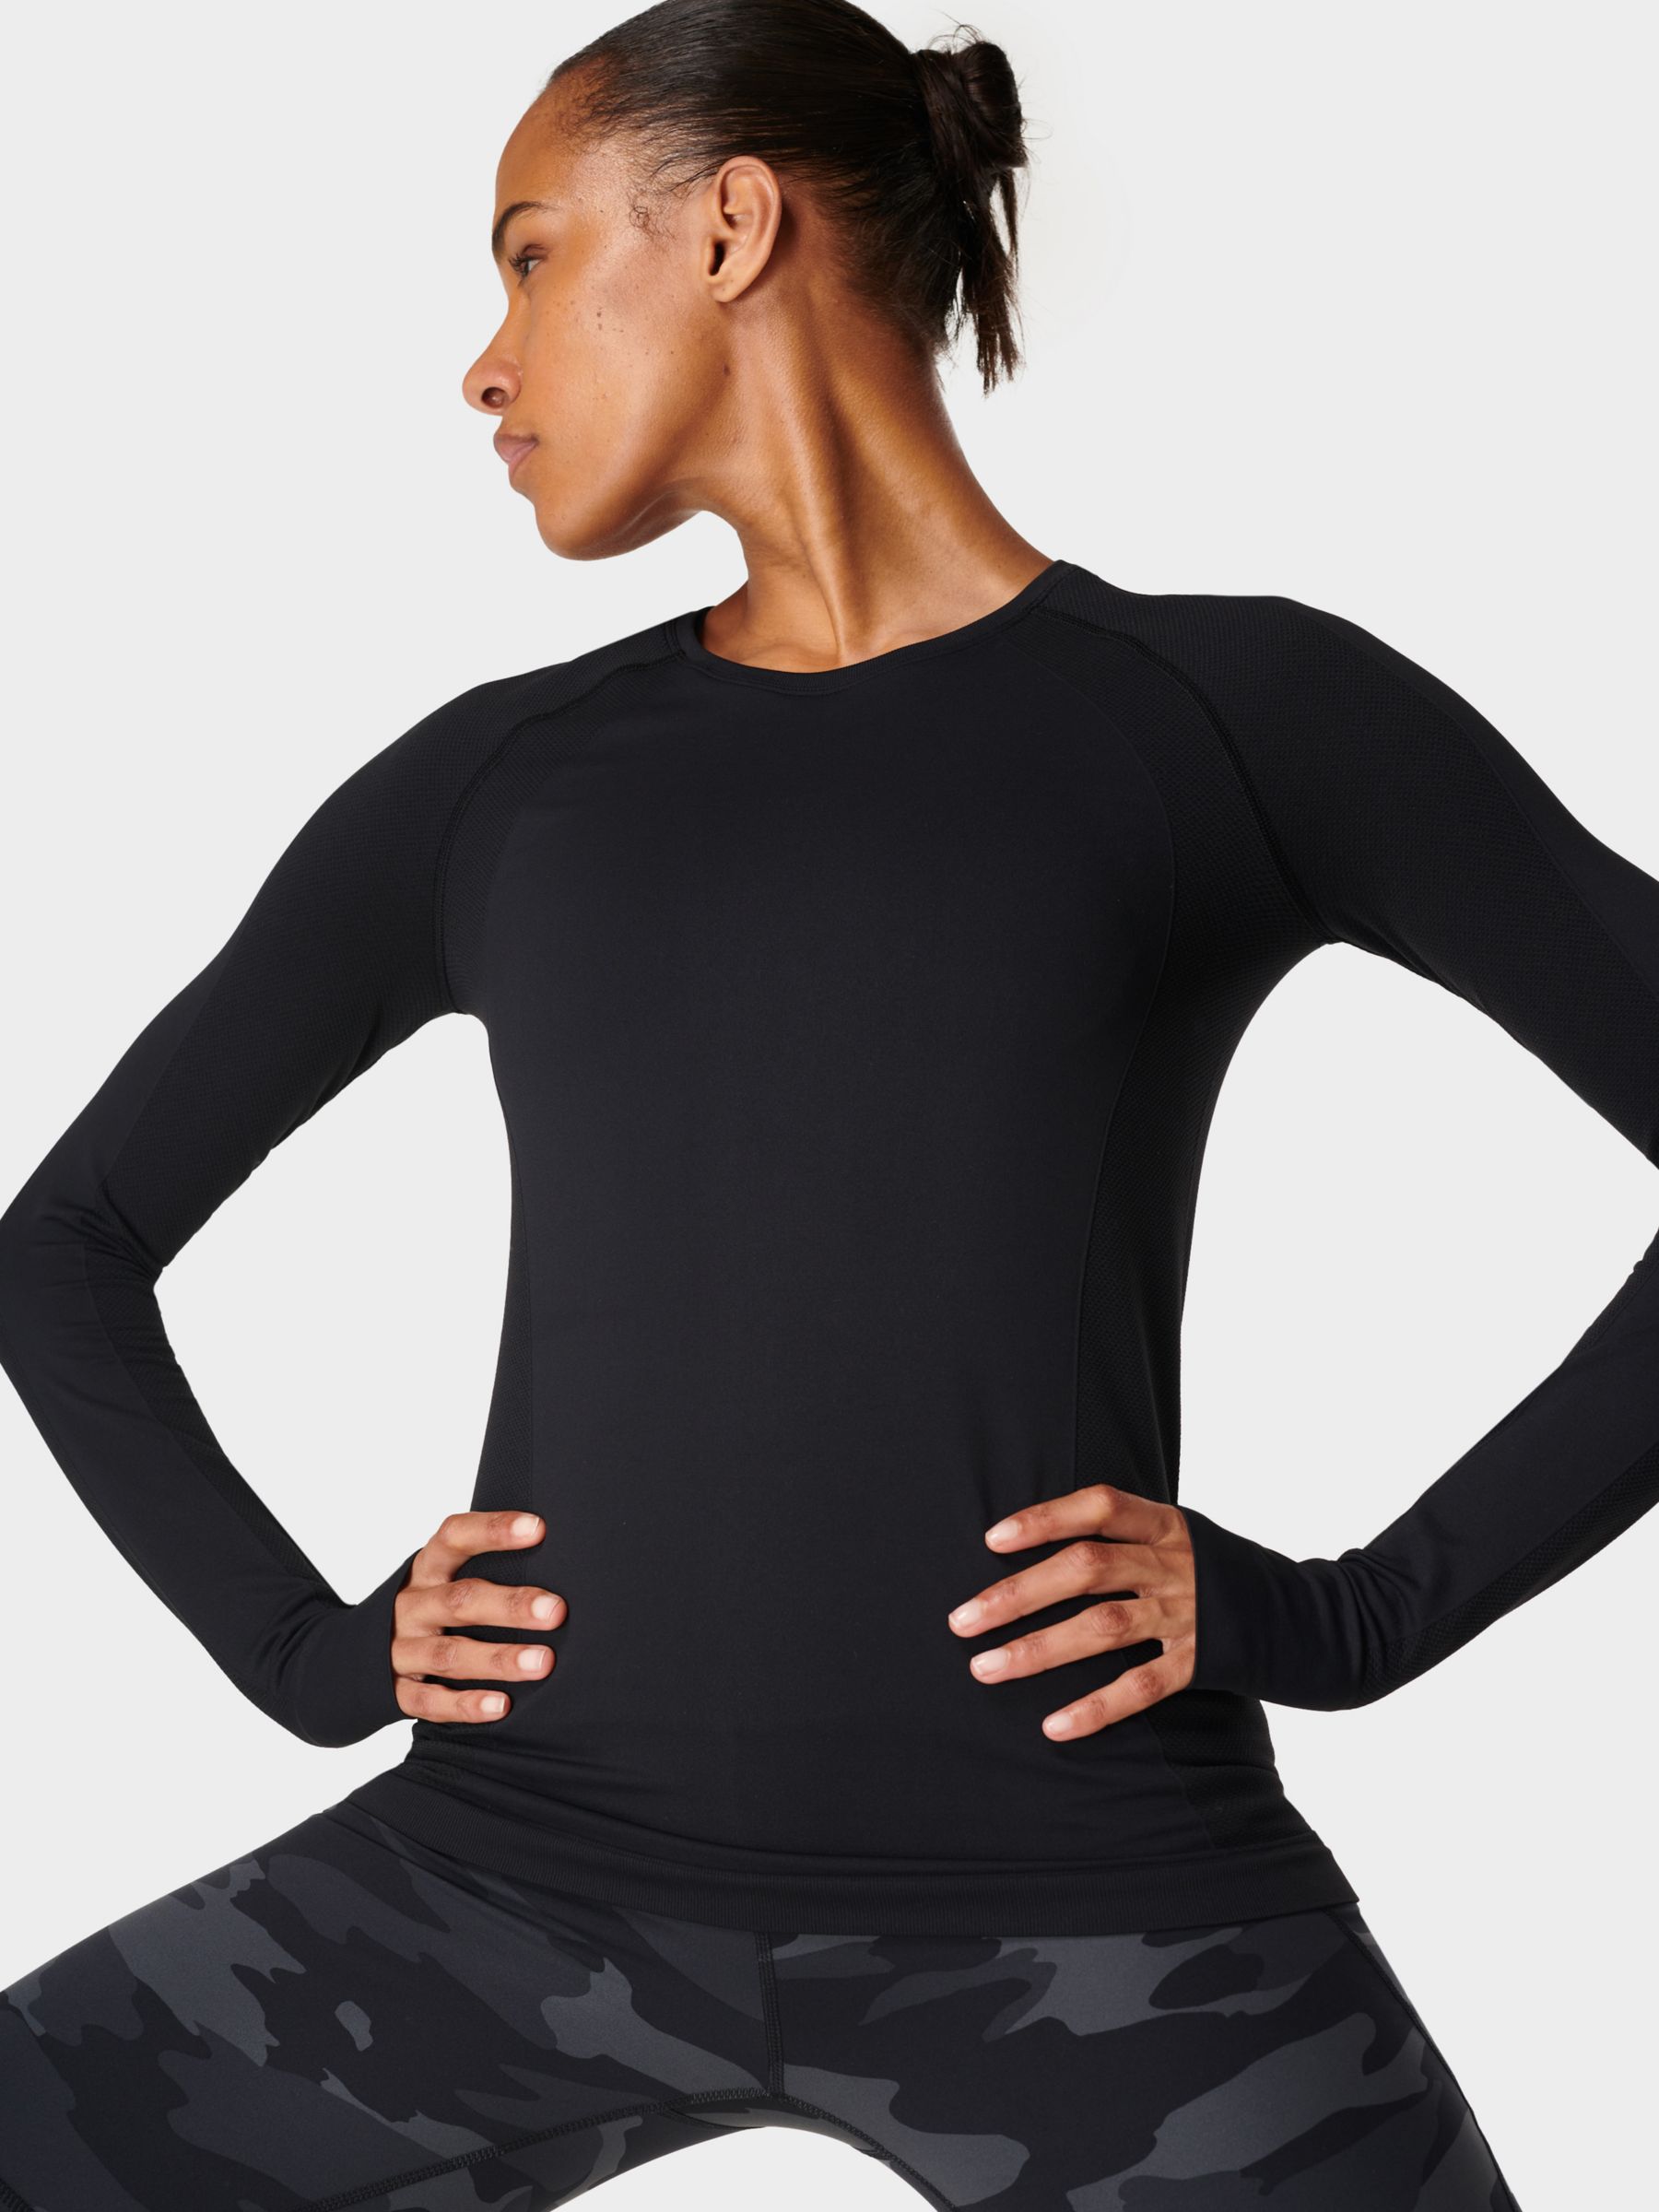 Sweaty Betty Athlete Seamless Long Sleeve Gym Top, Black, XS